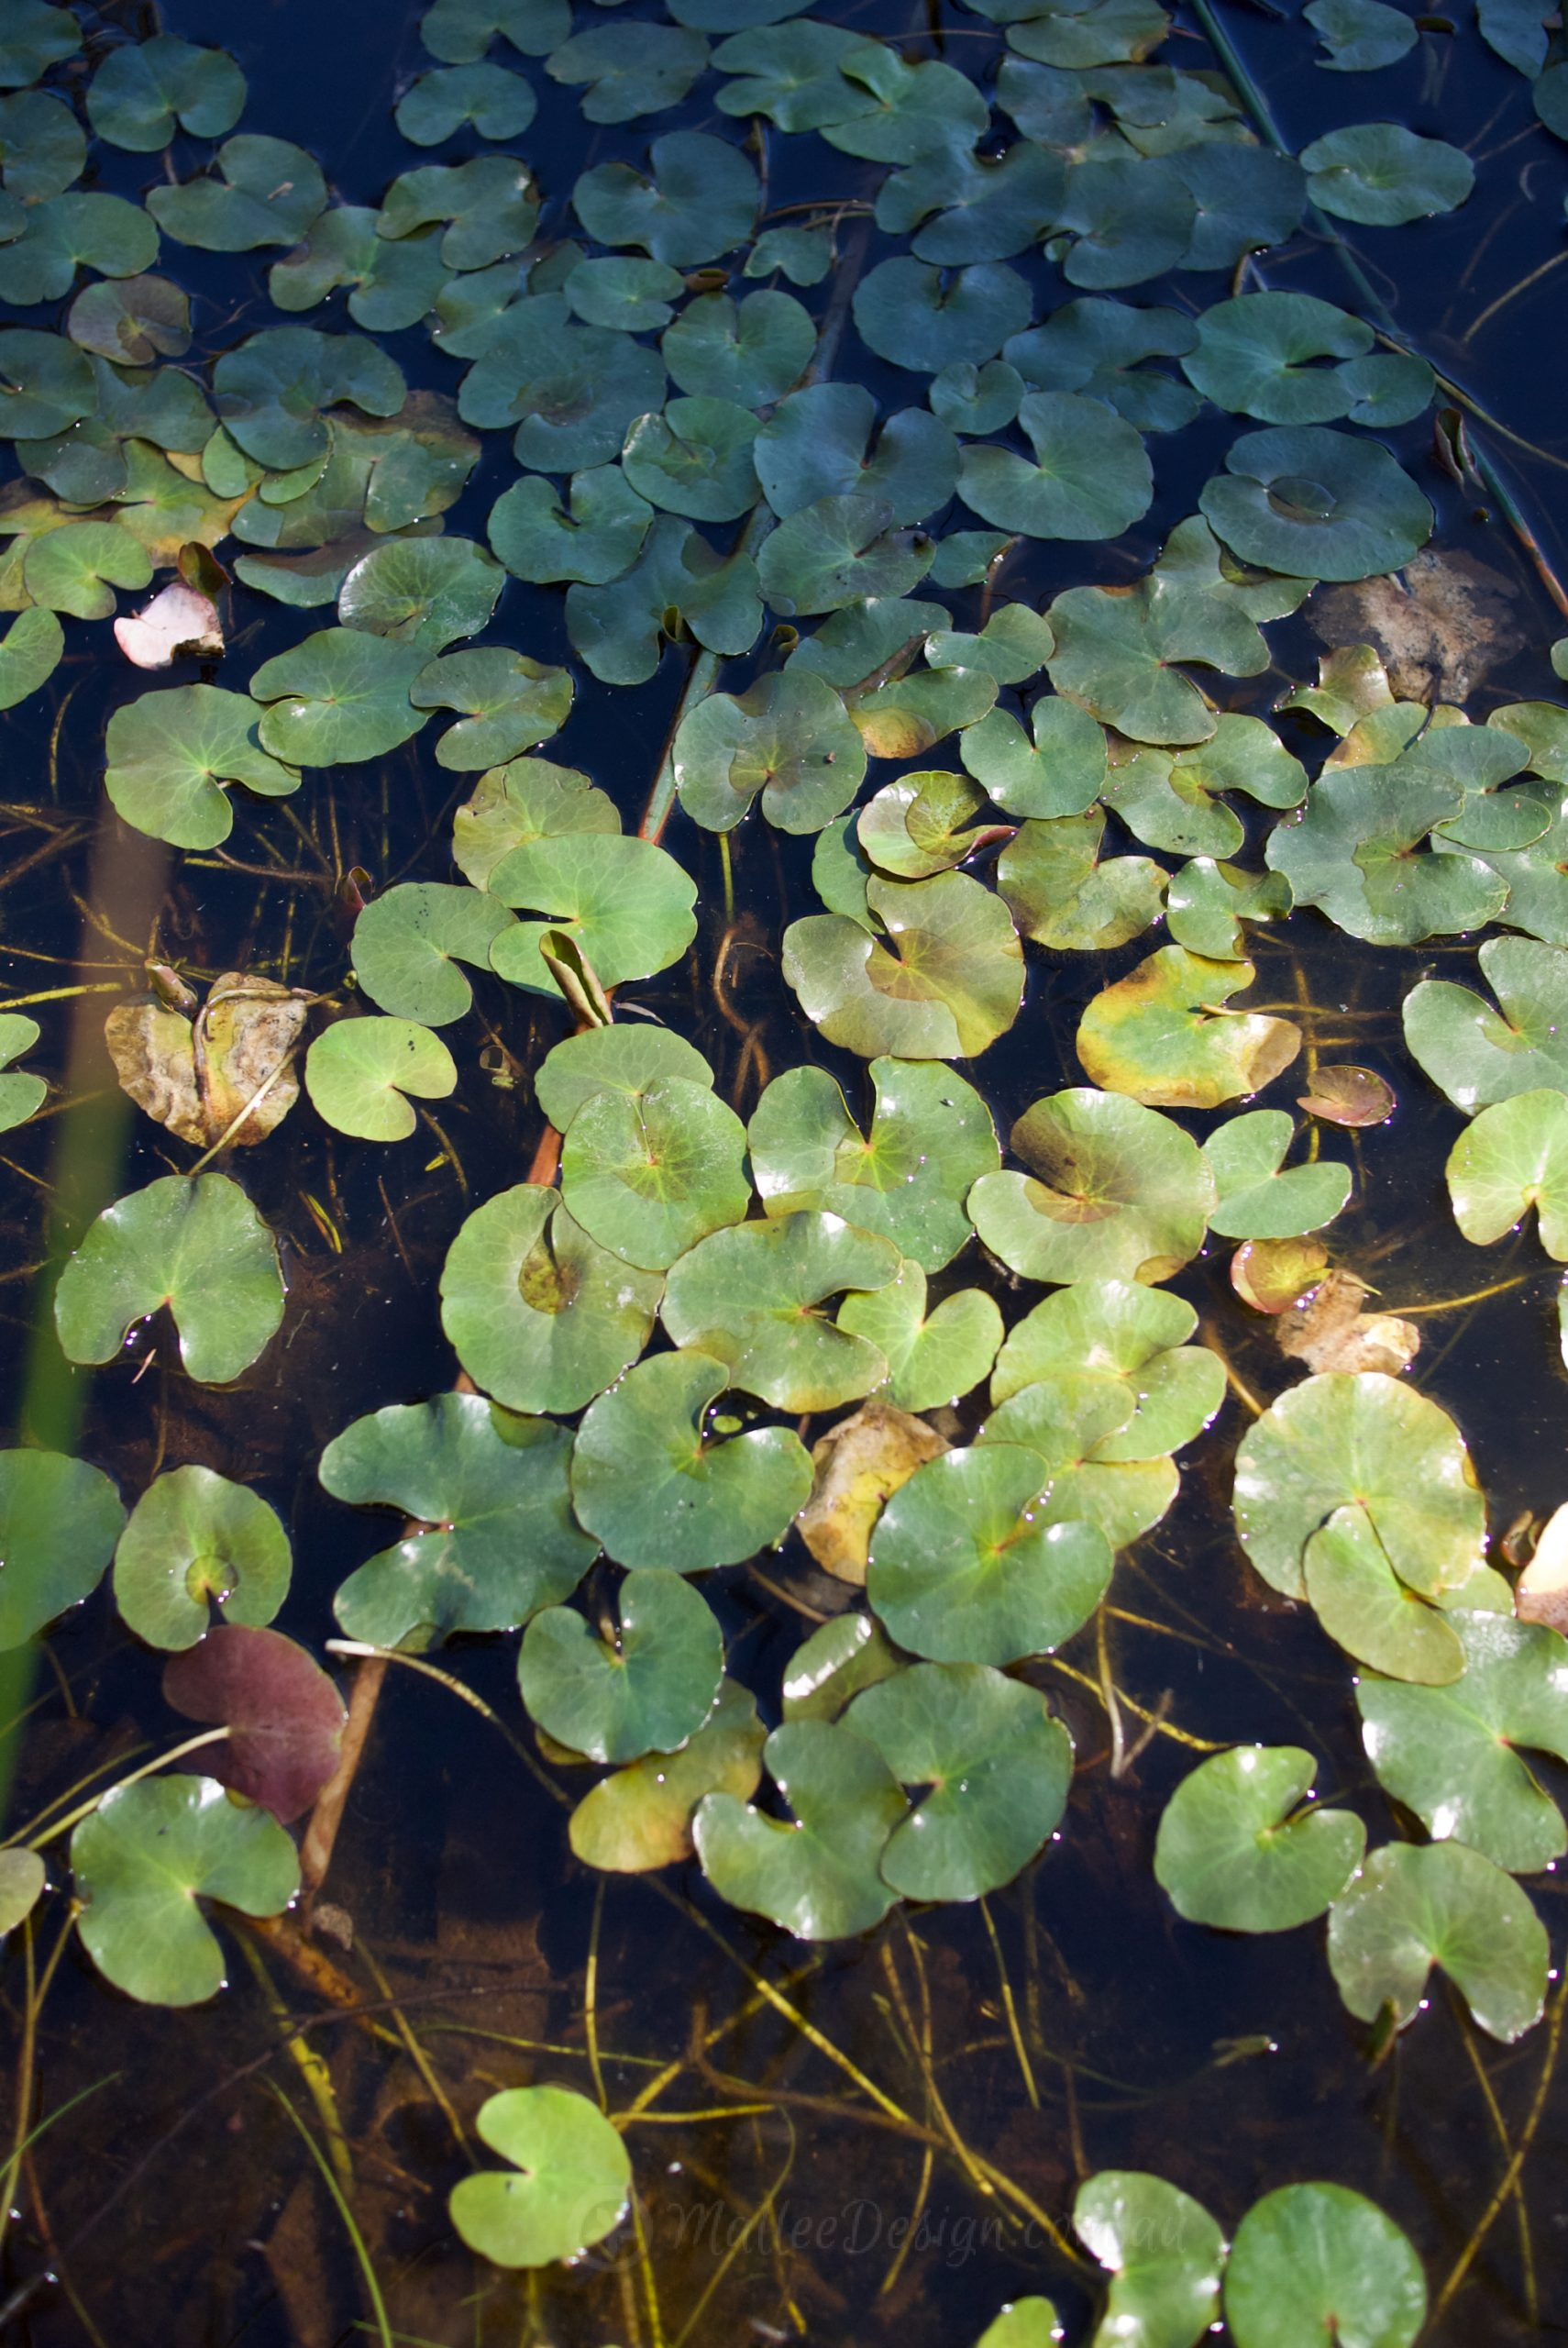 Two favourite floating water plants: Nymphiodes geminata & Marsilea drummondii